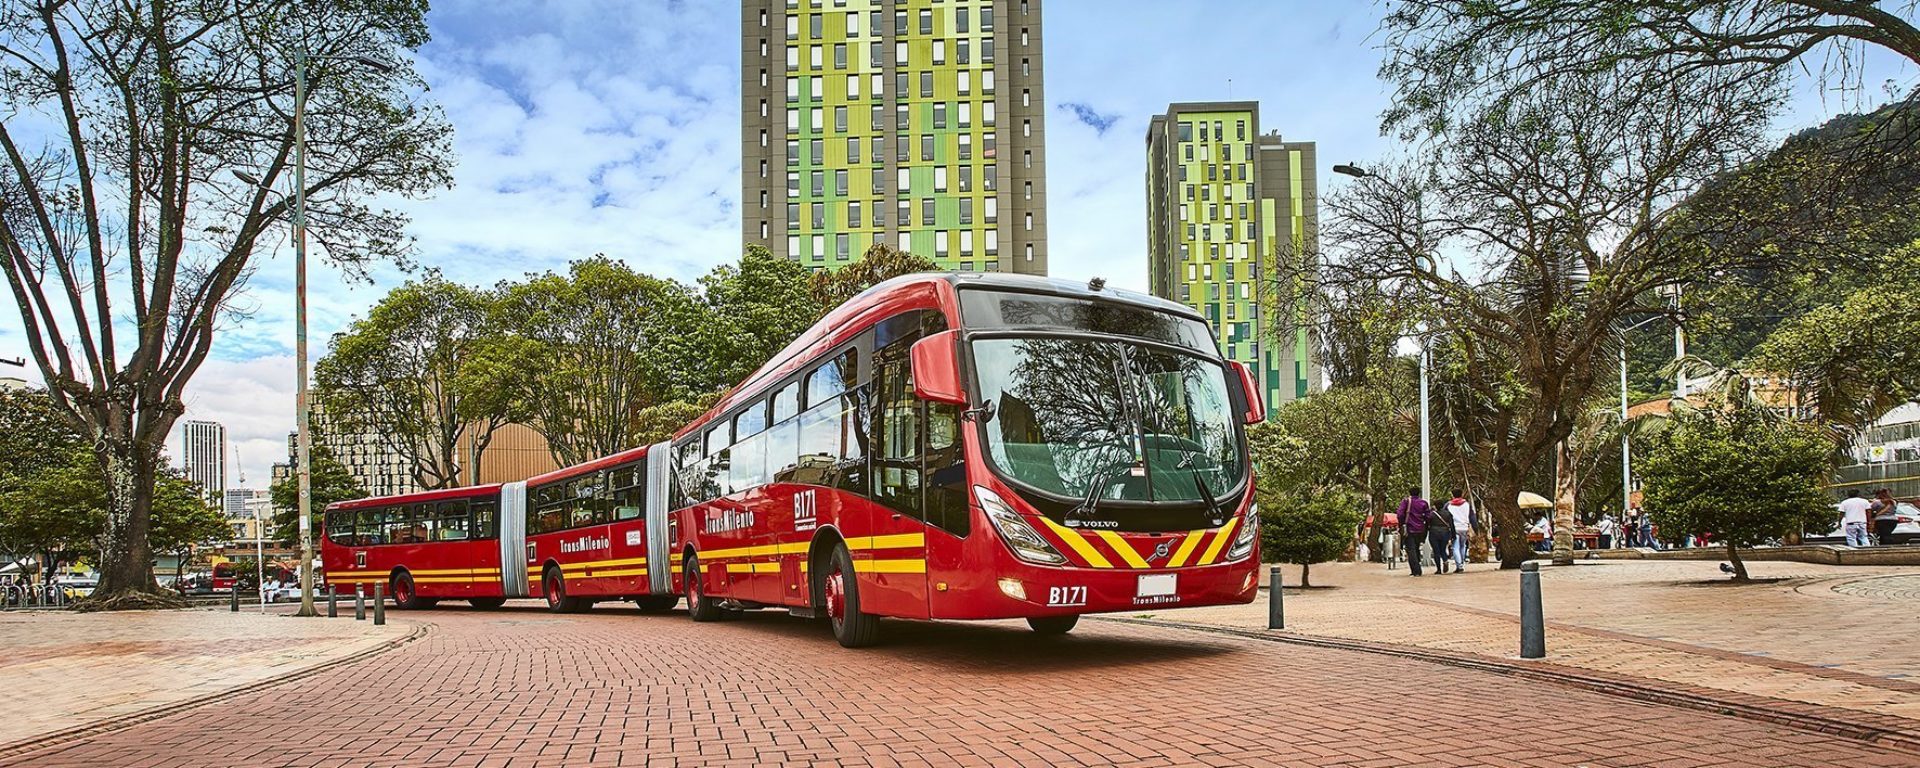 Bus à Haut Niveau de Service rouge - Transmilenio Transdev Bogota bus biarticulated bi articulé rapid transit BHNS BRT